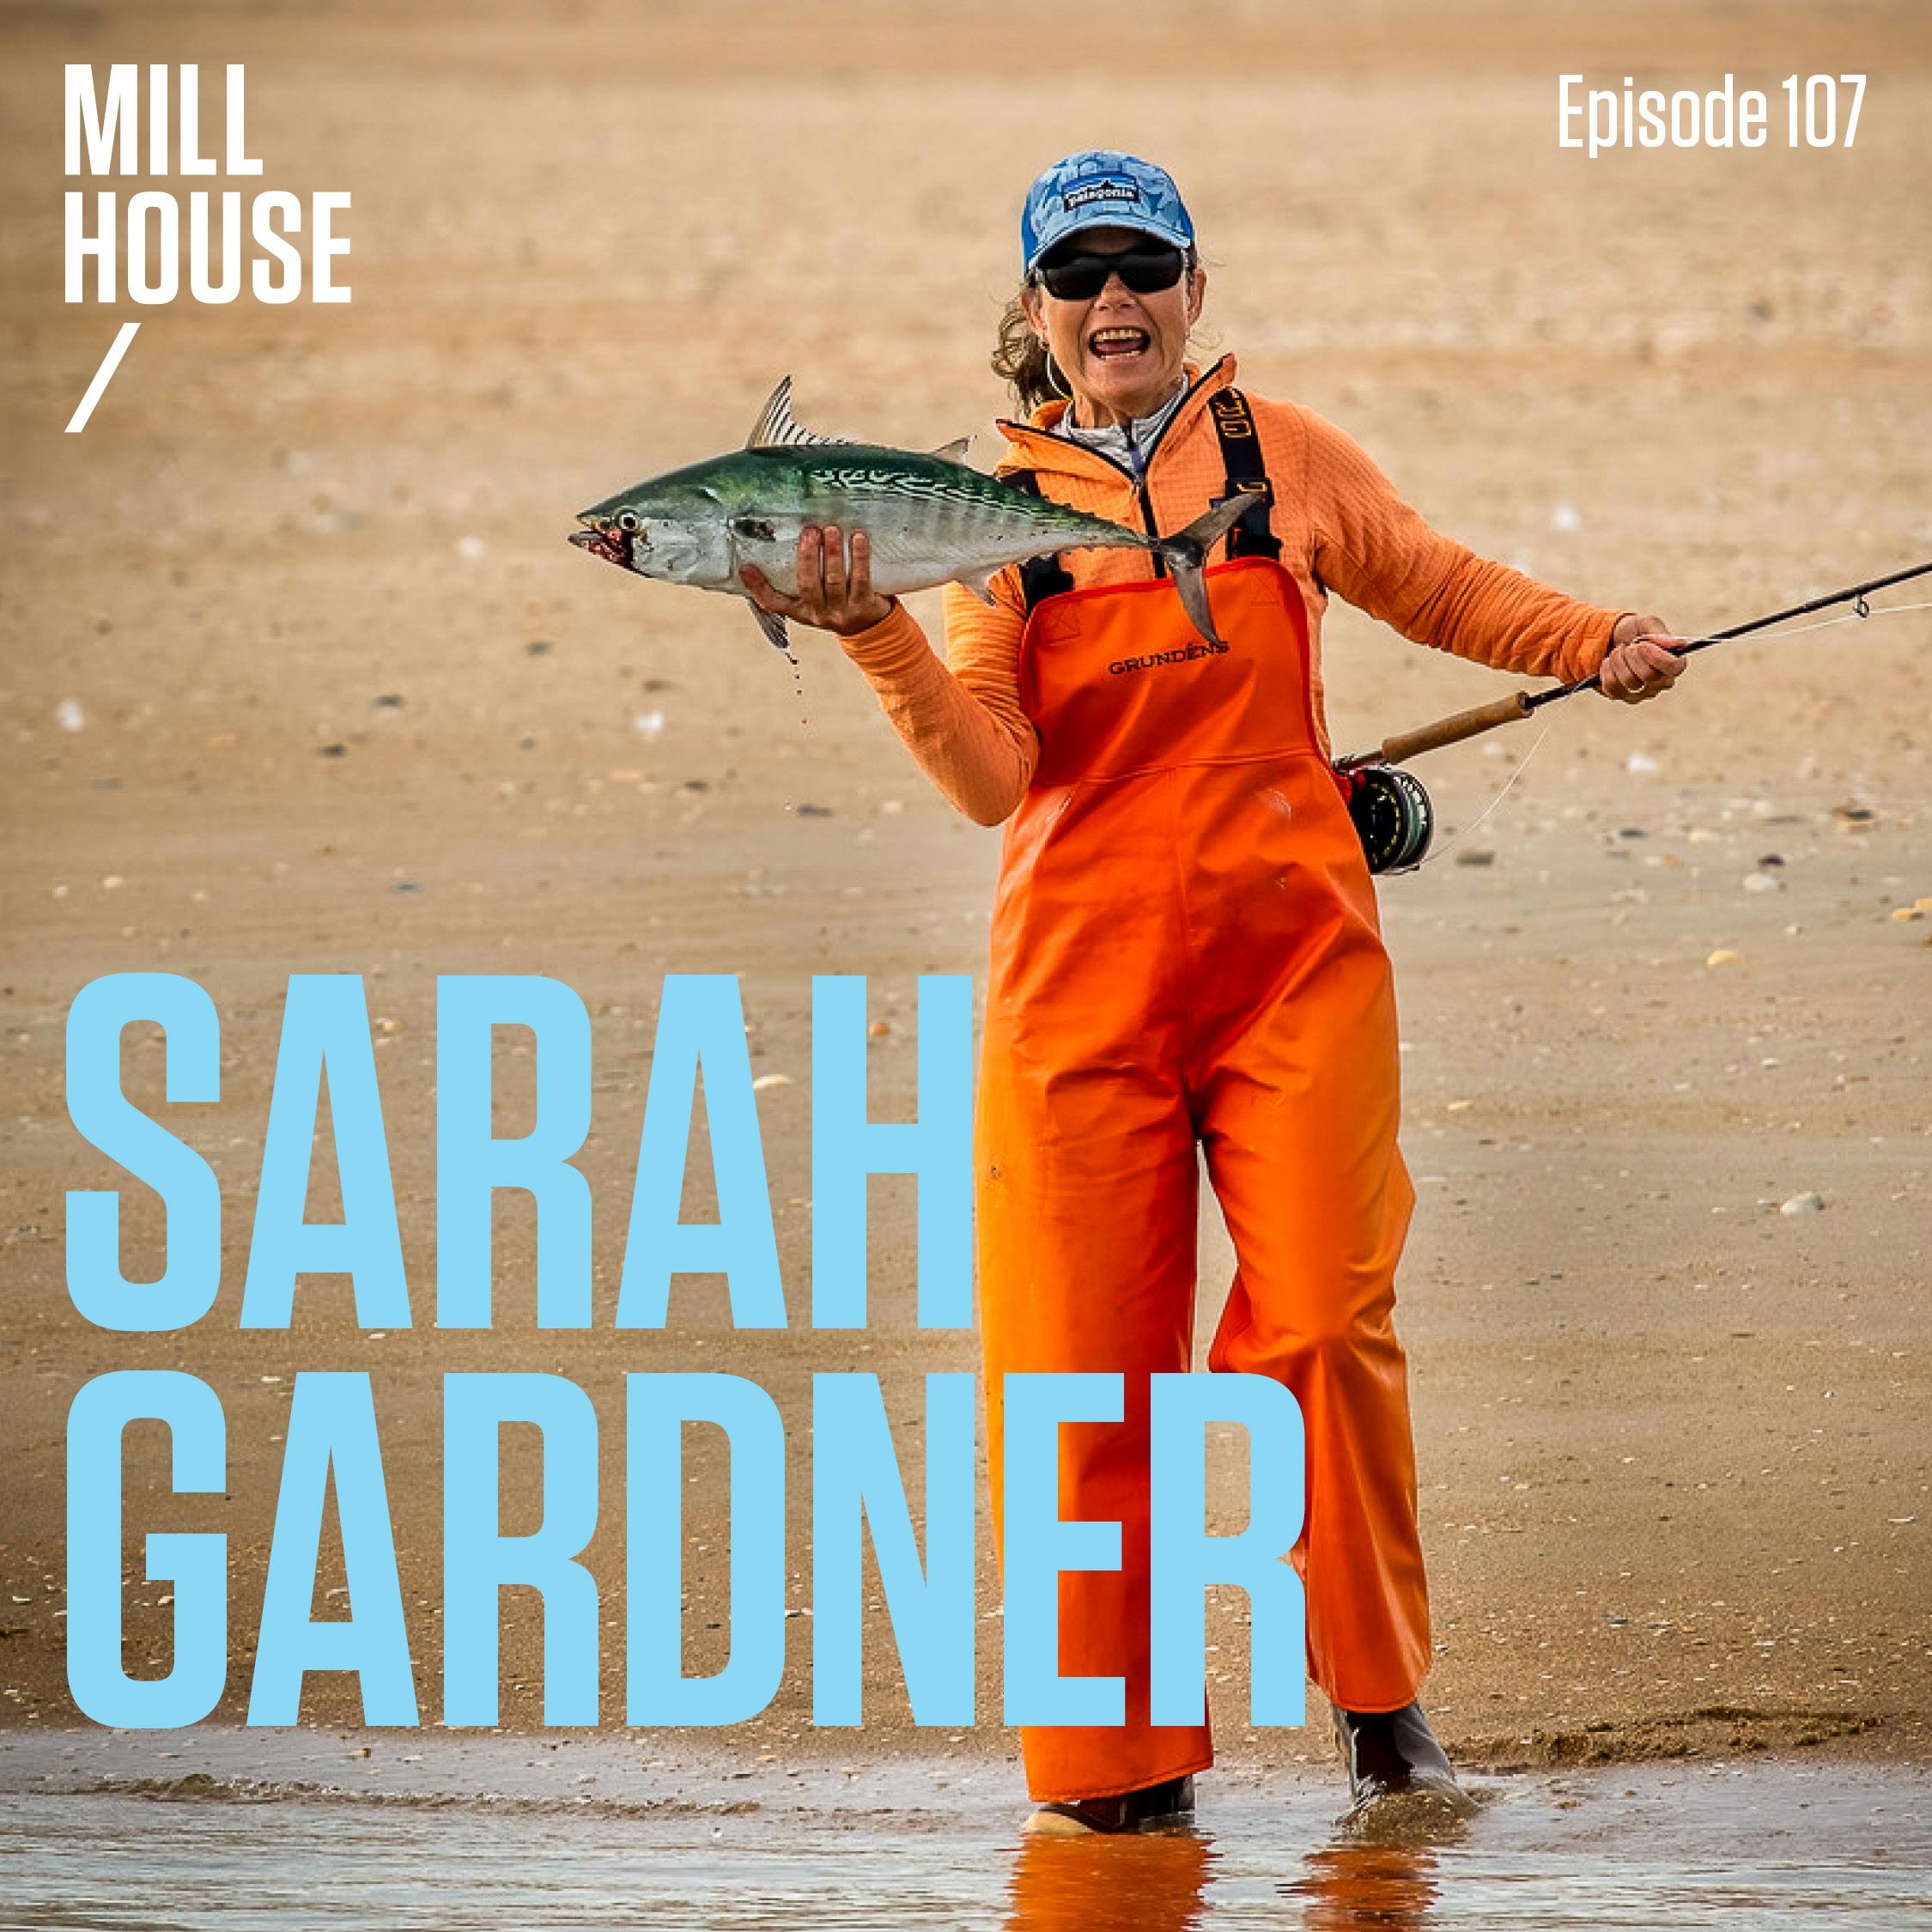 Episode 107: Capt. Sarah Gardner - ”Fly Girl”